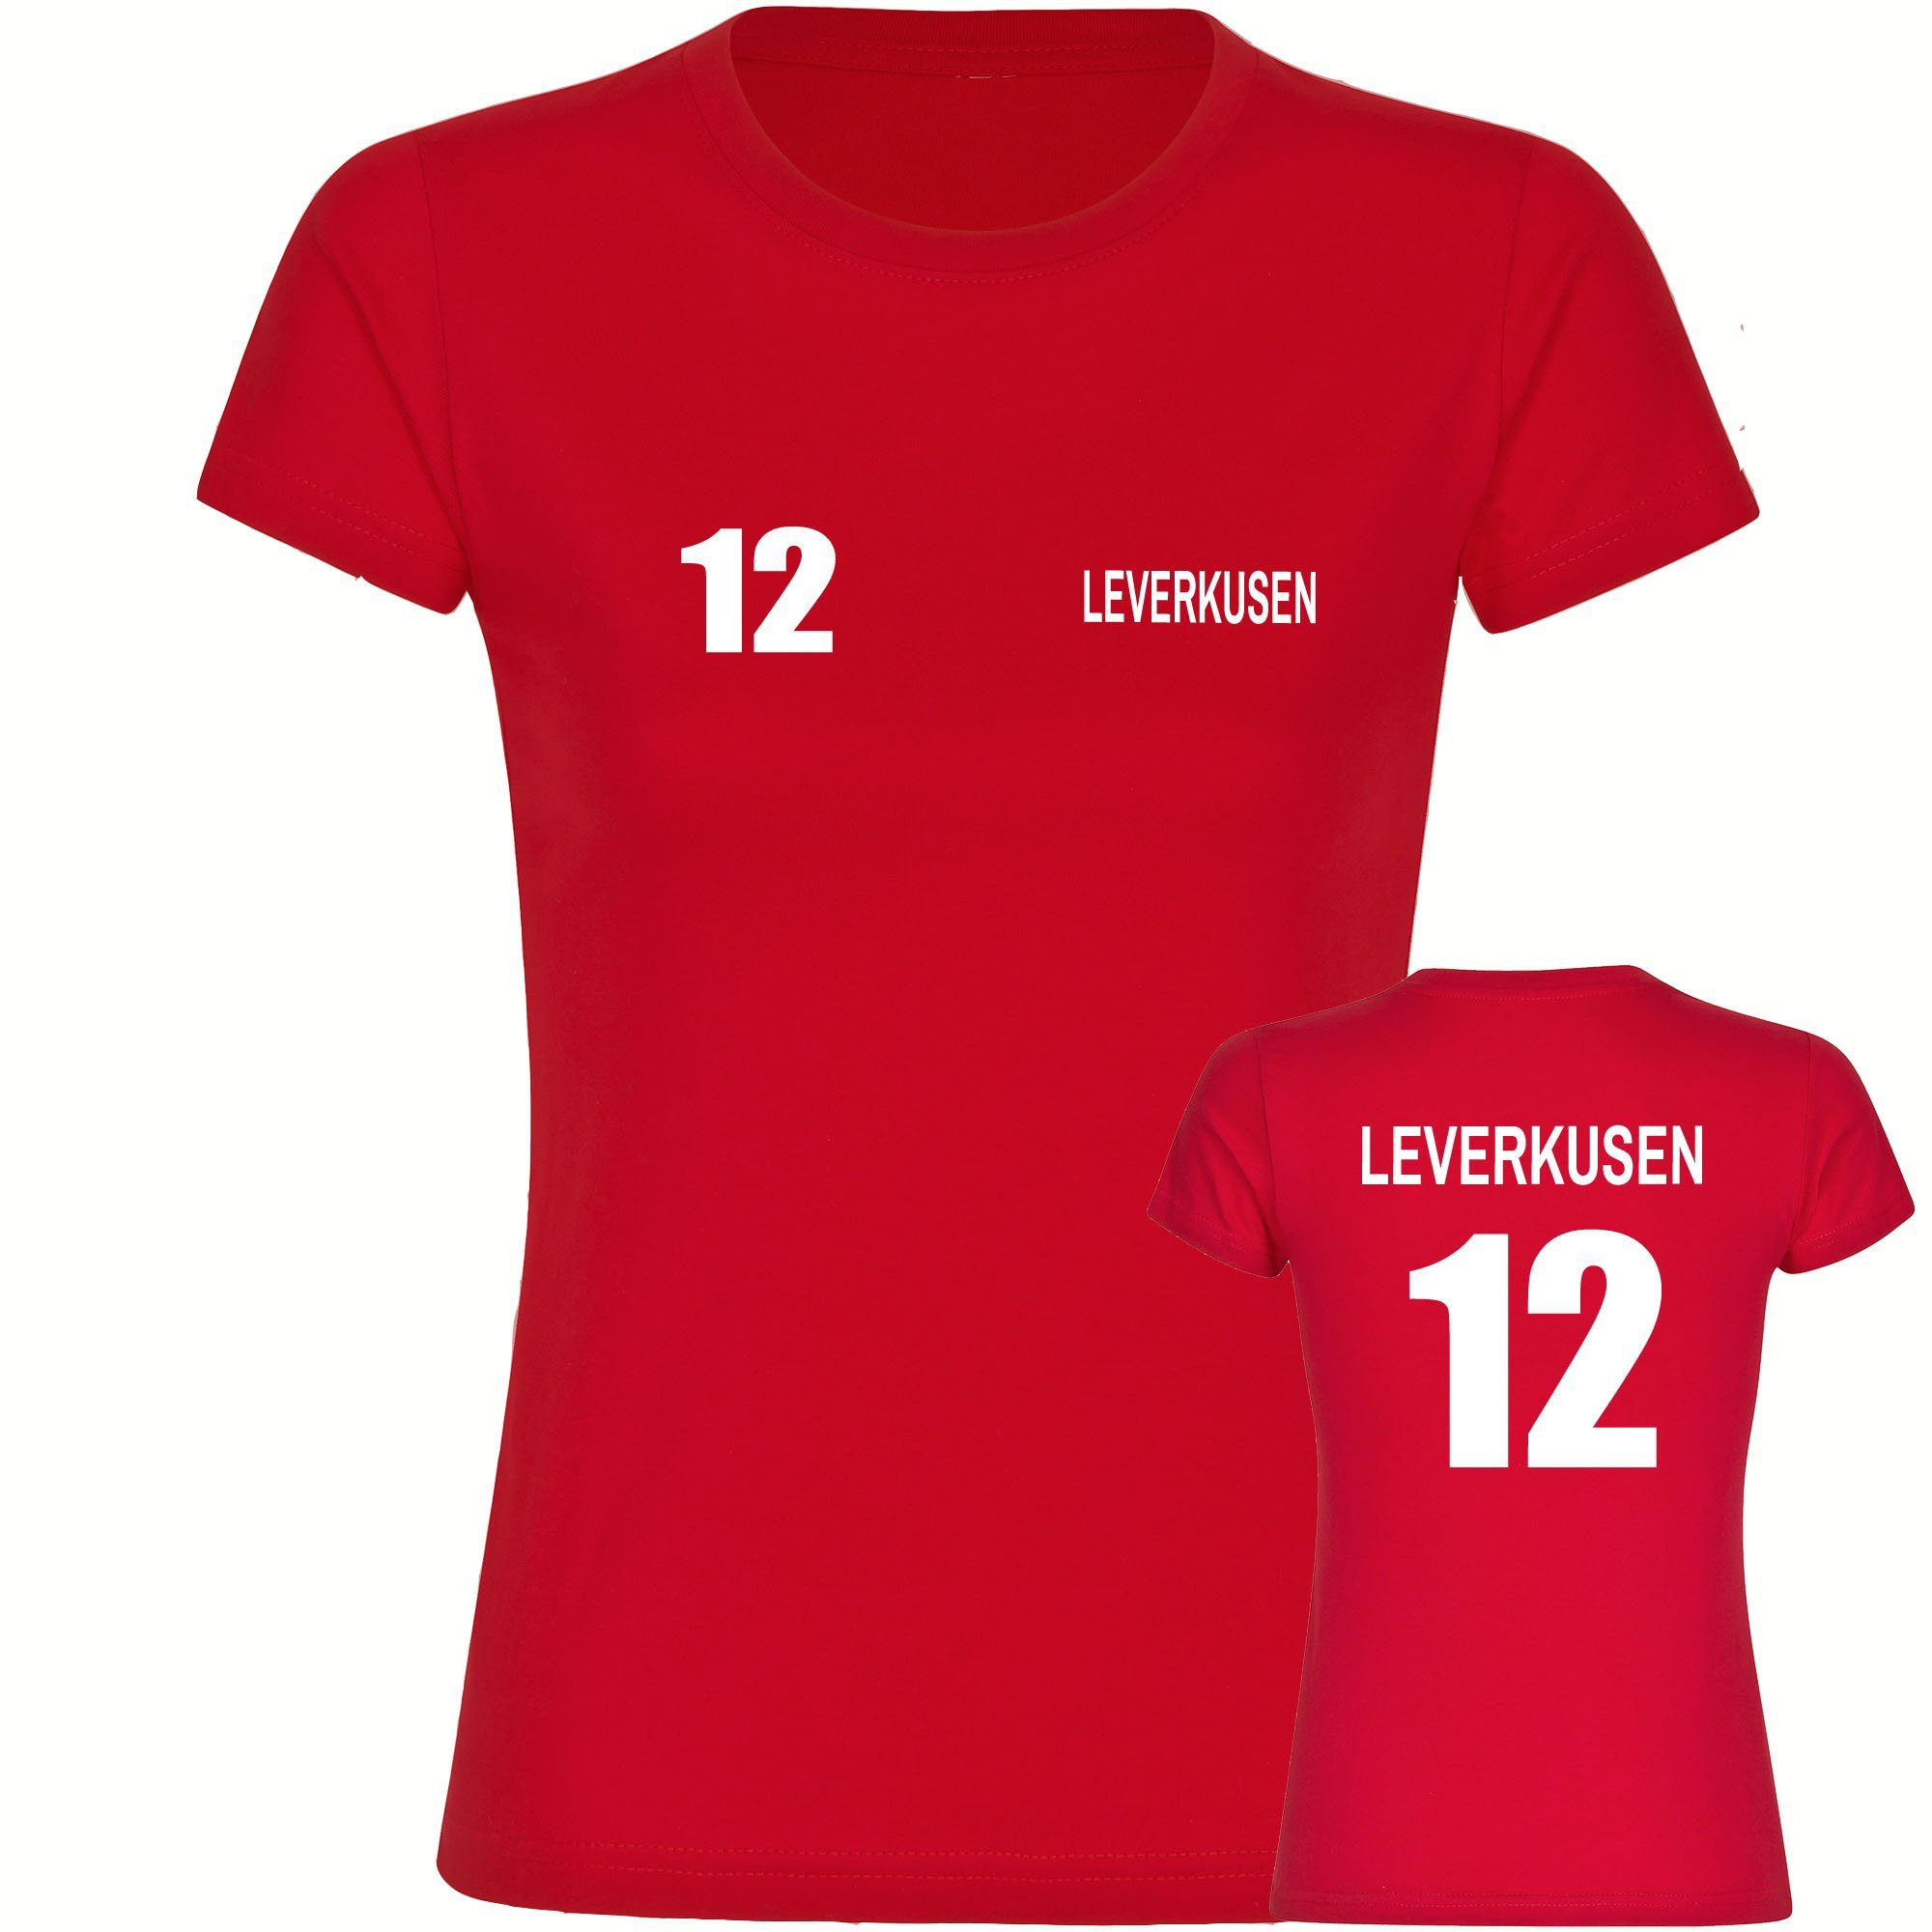 multifanshop T-Shirt Damen Leverkusen - Trikot 12 - Frauen